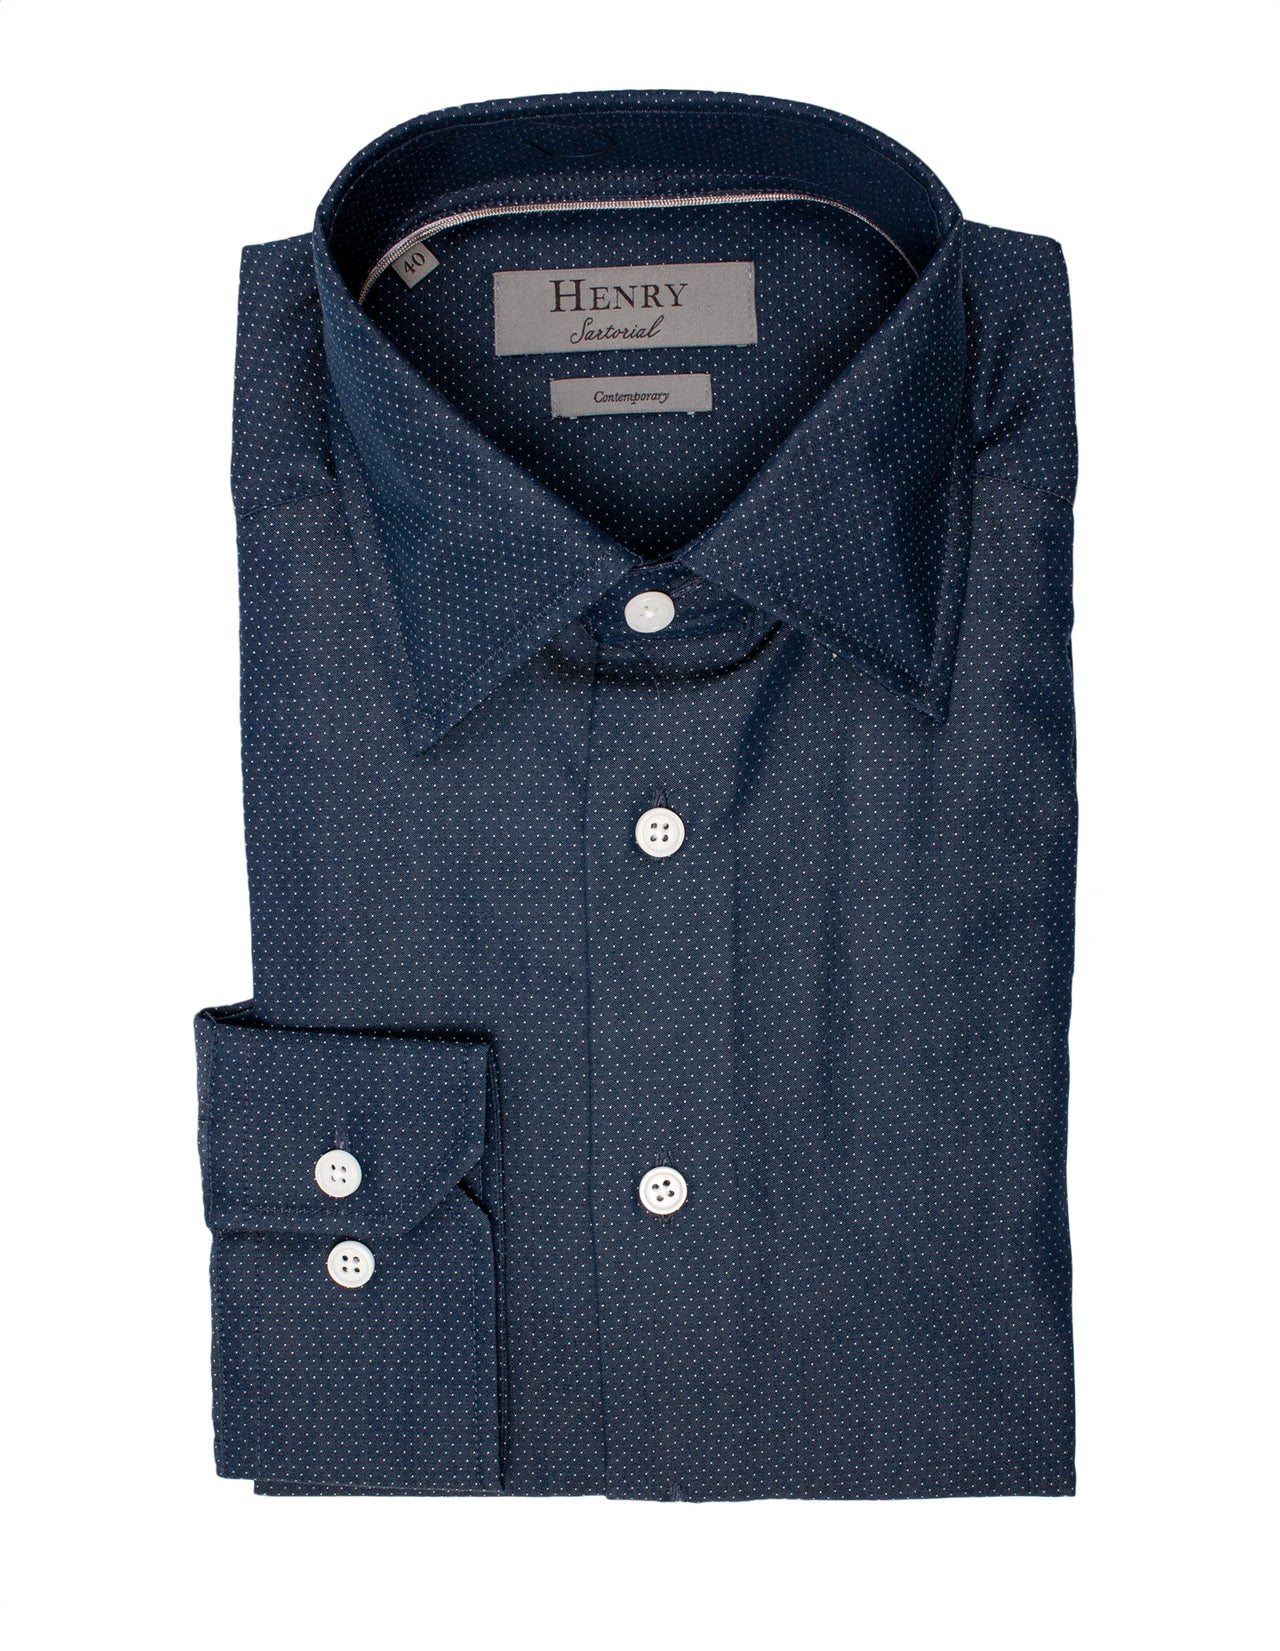 HENRY SARTORIAL Classic Fit Dot Shirt NAVY